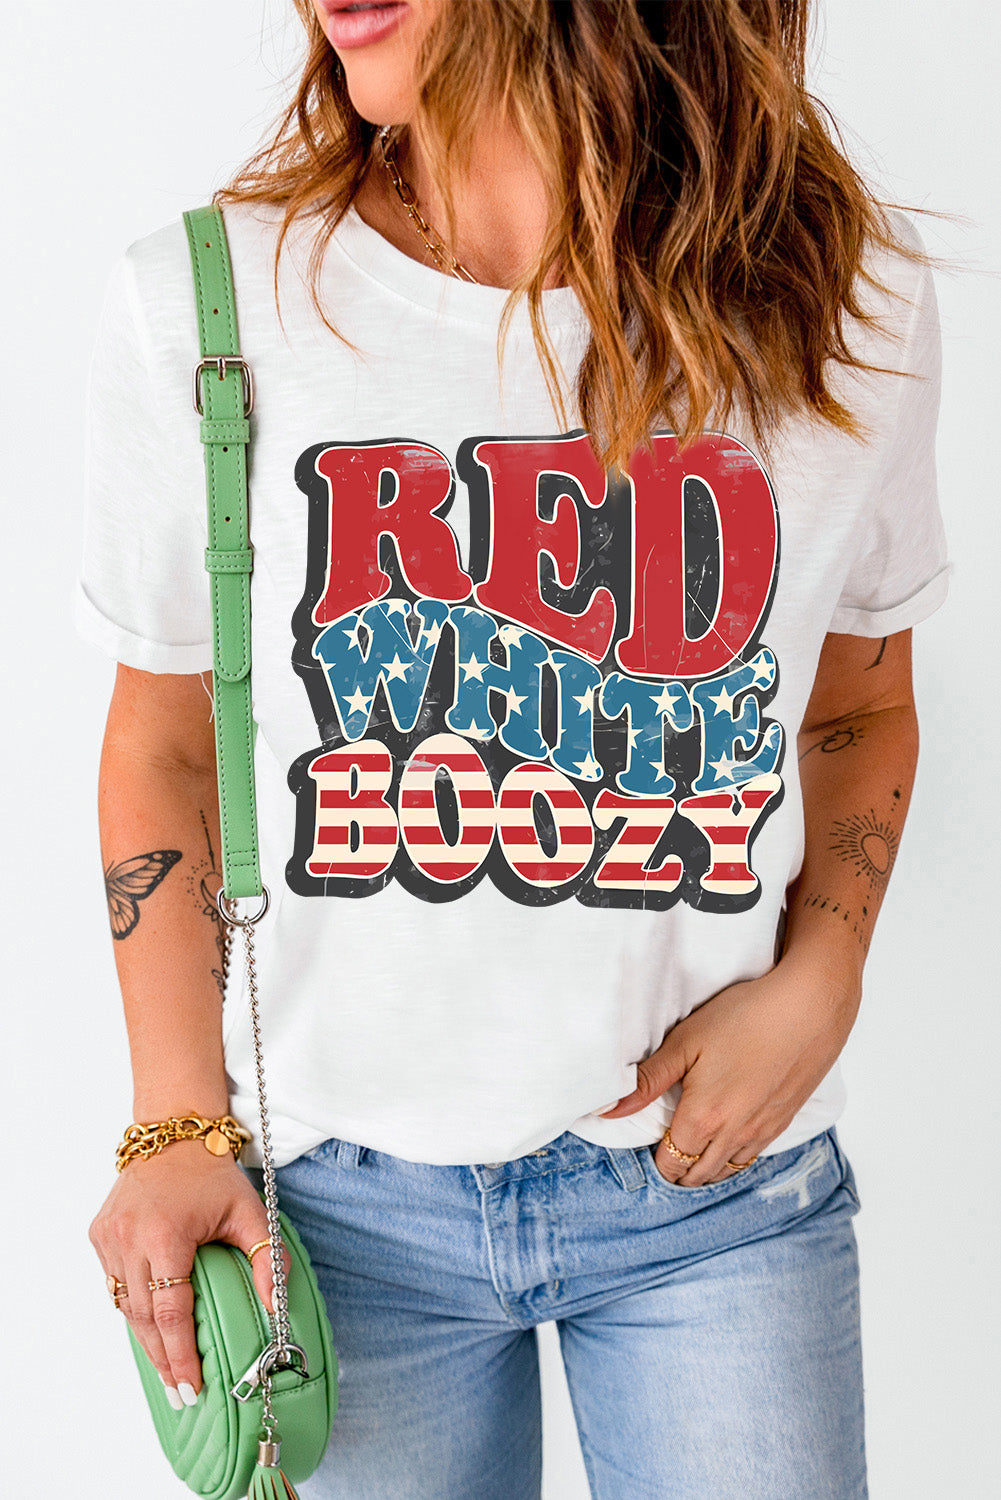 "Red White Boozy" Graphic T-Shirt